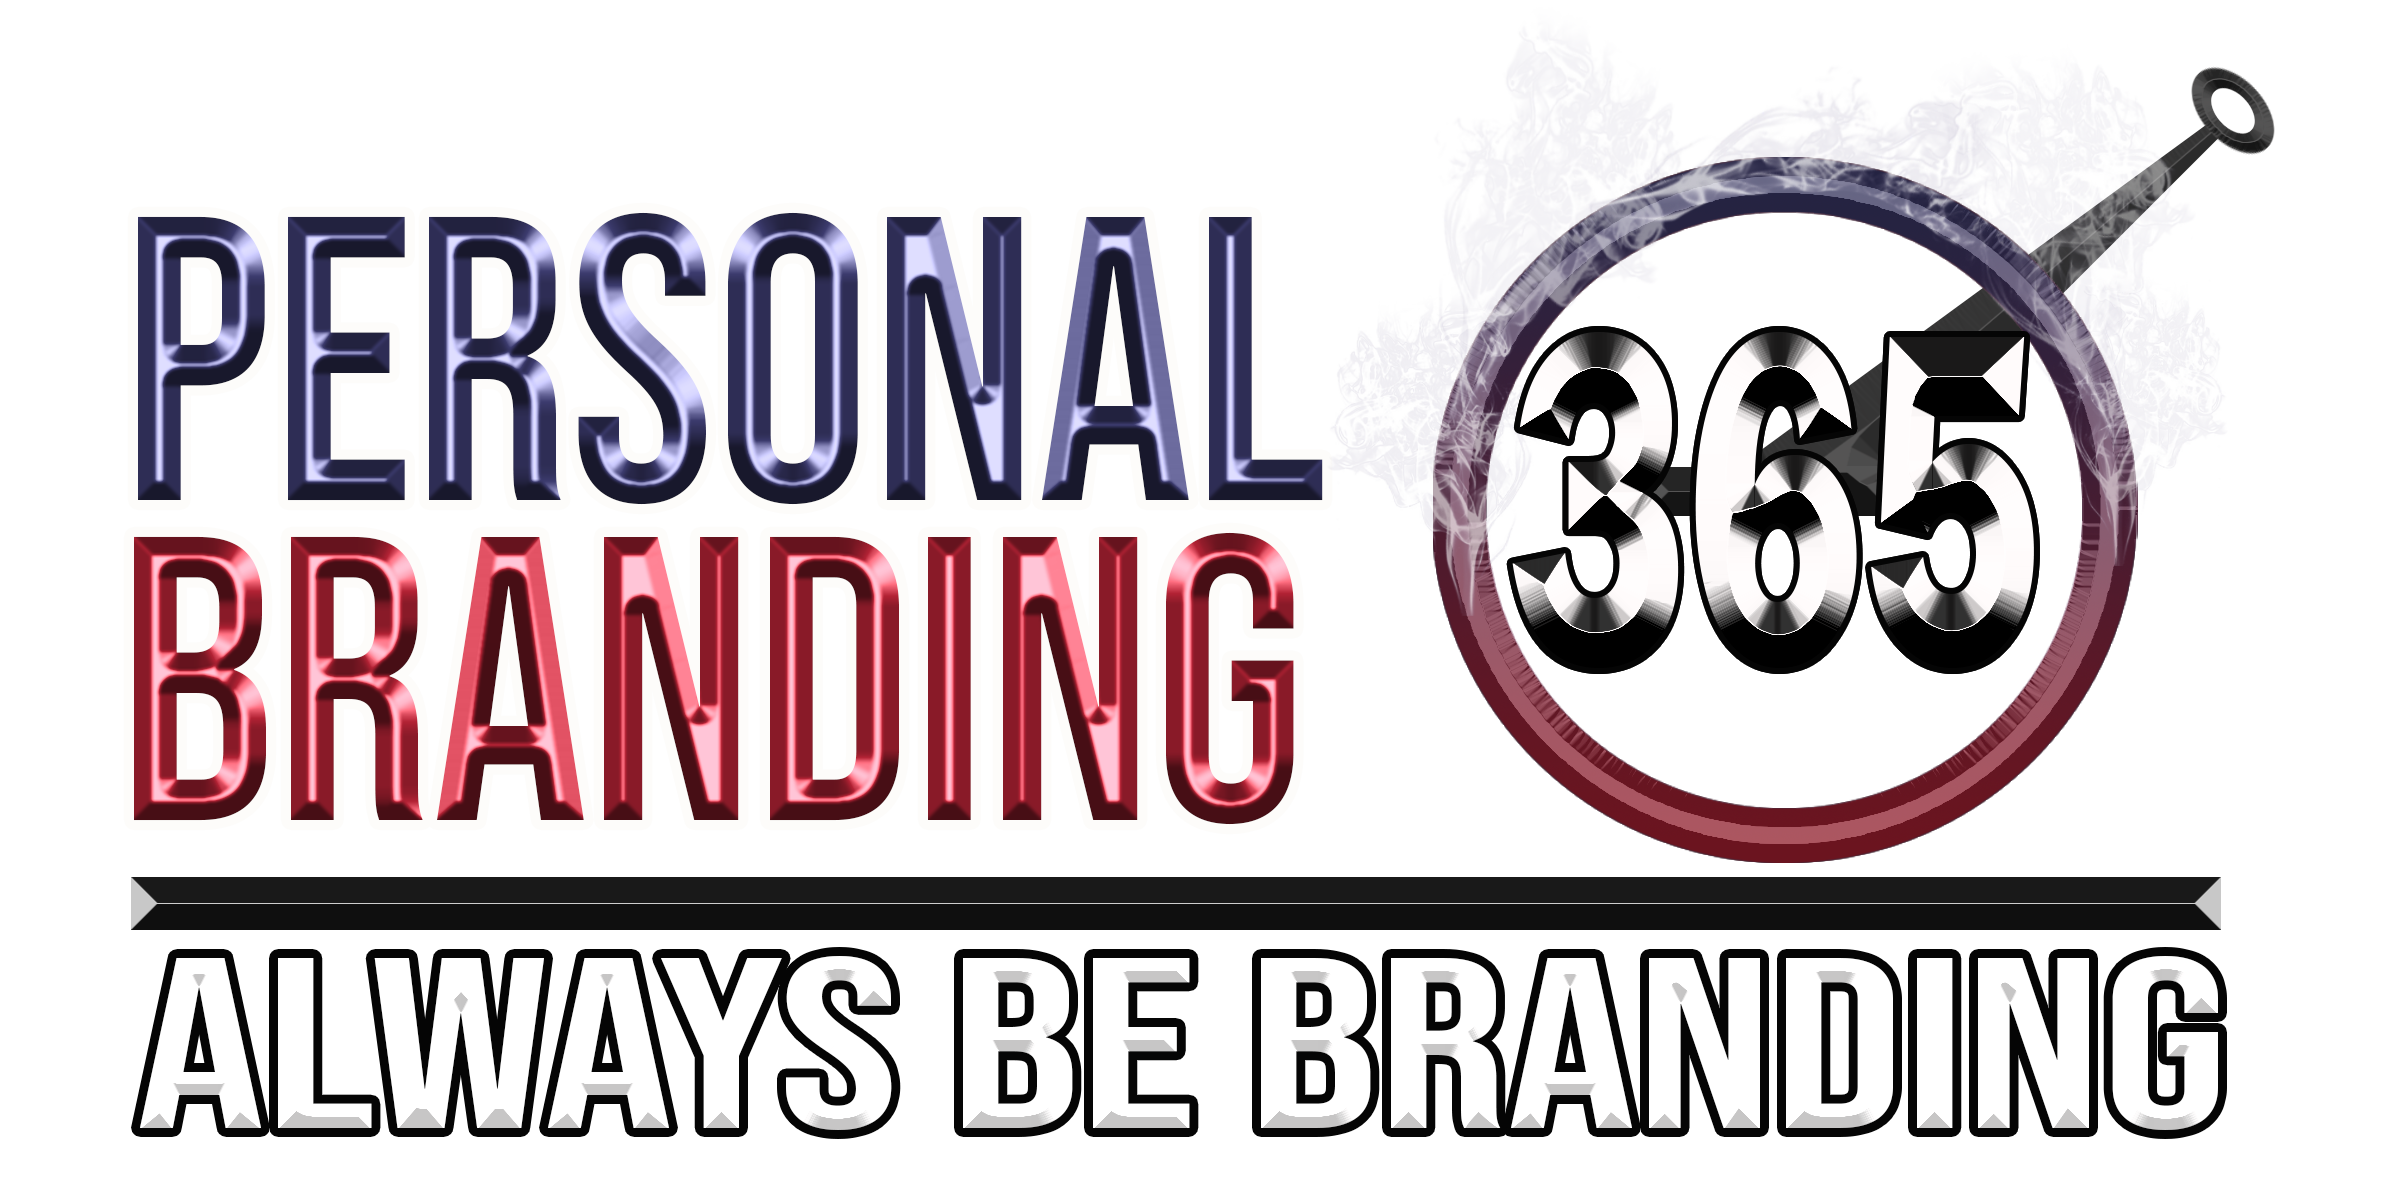 cortez hustles personal branding 365 logo